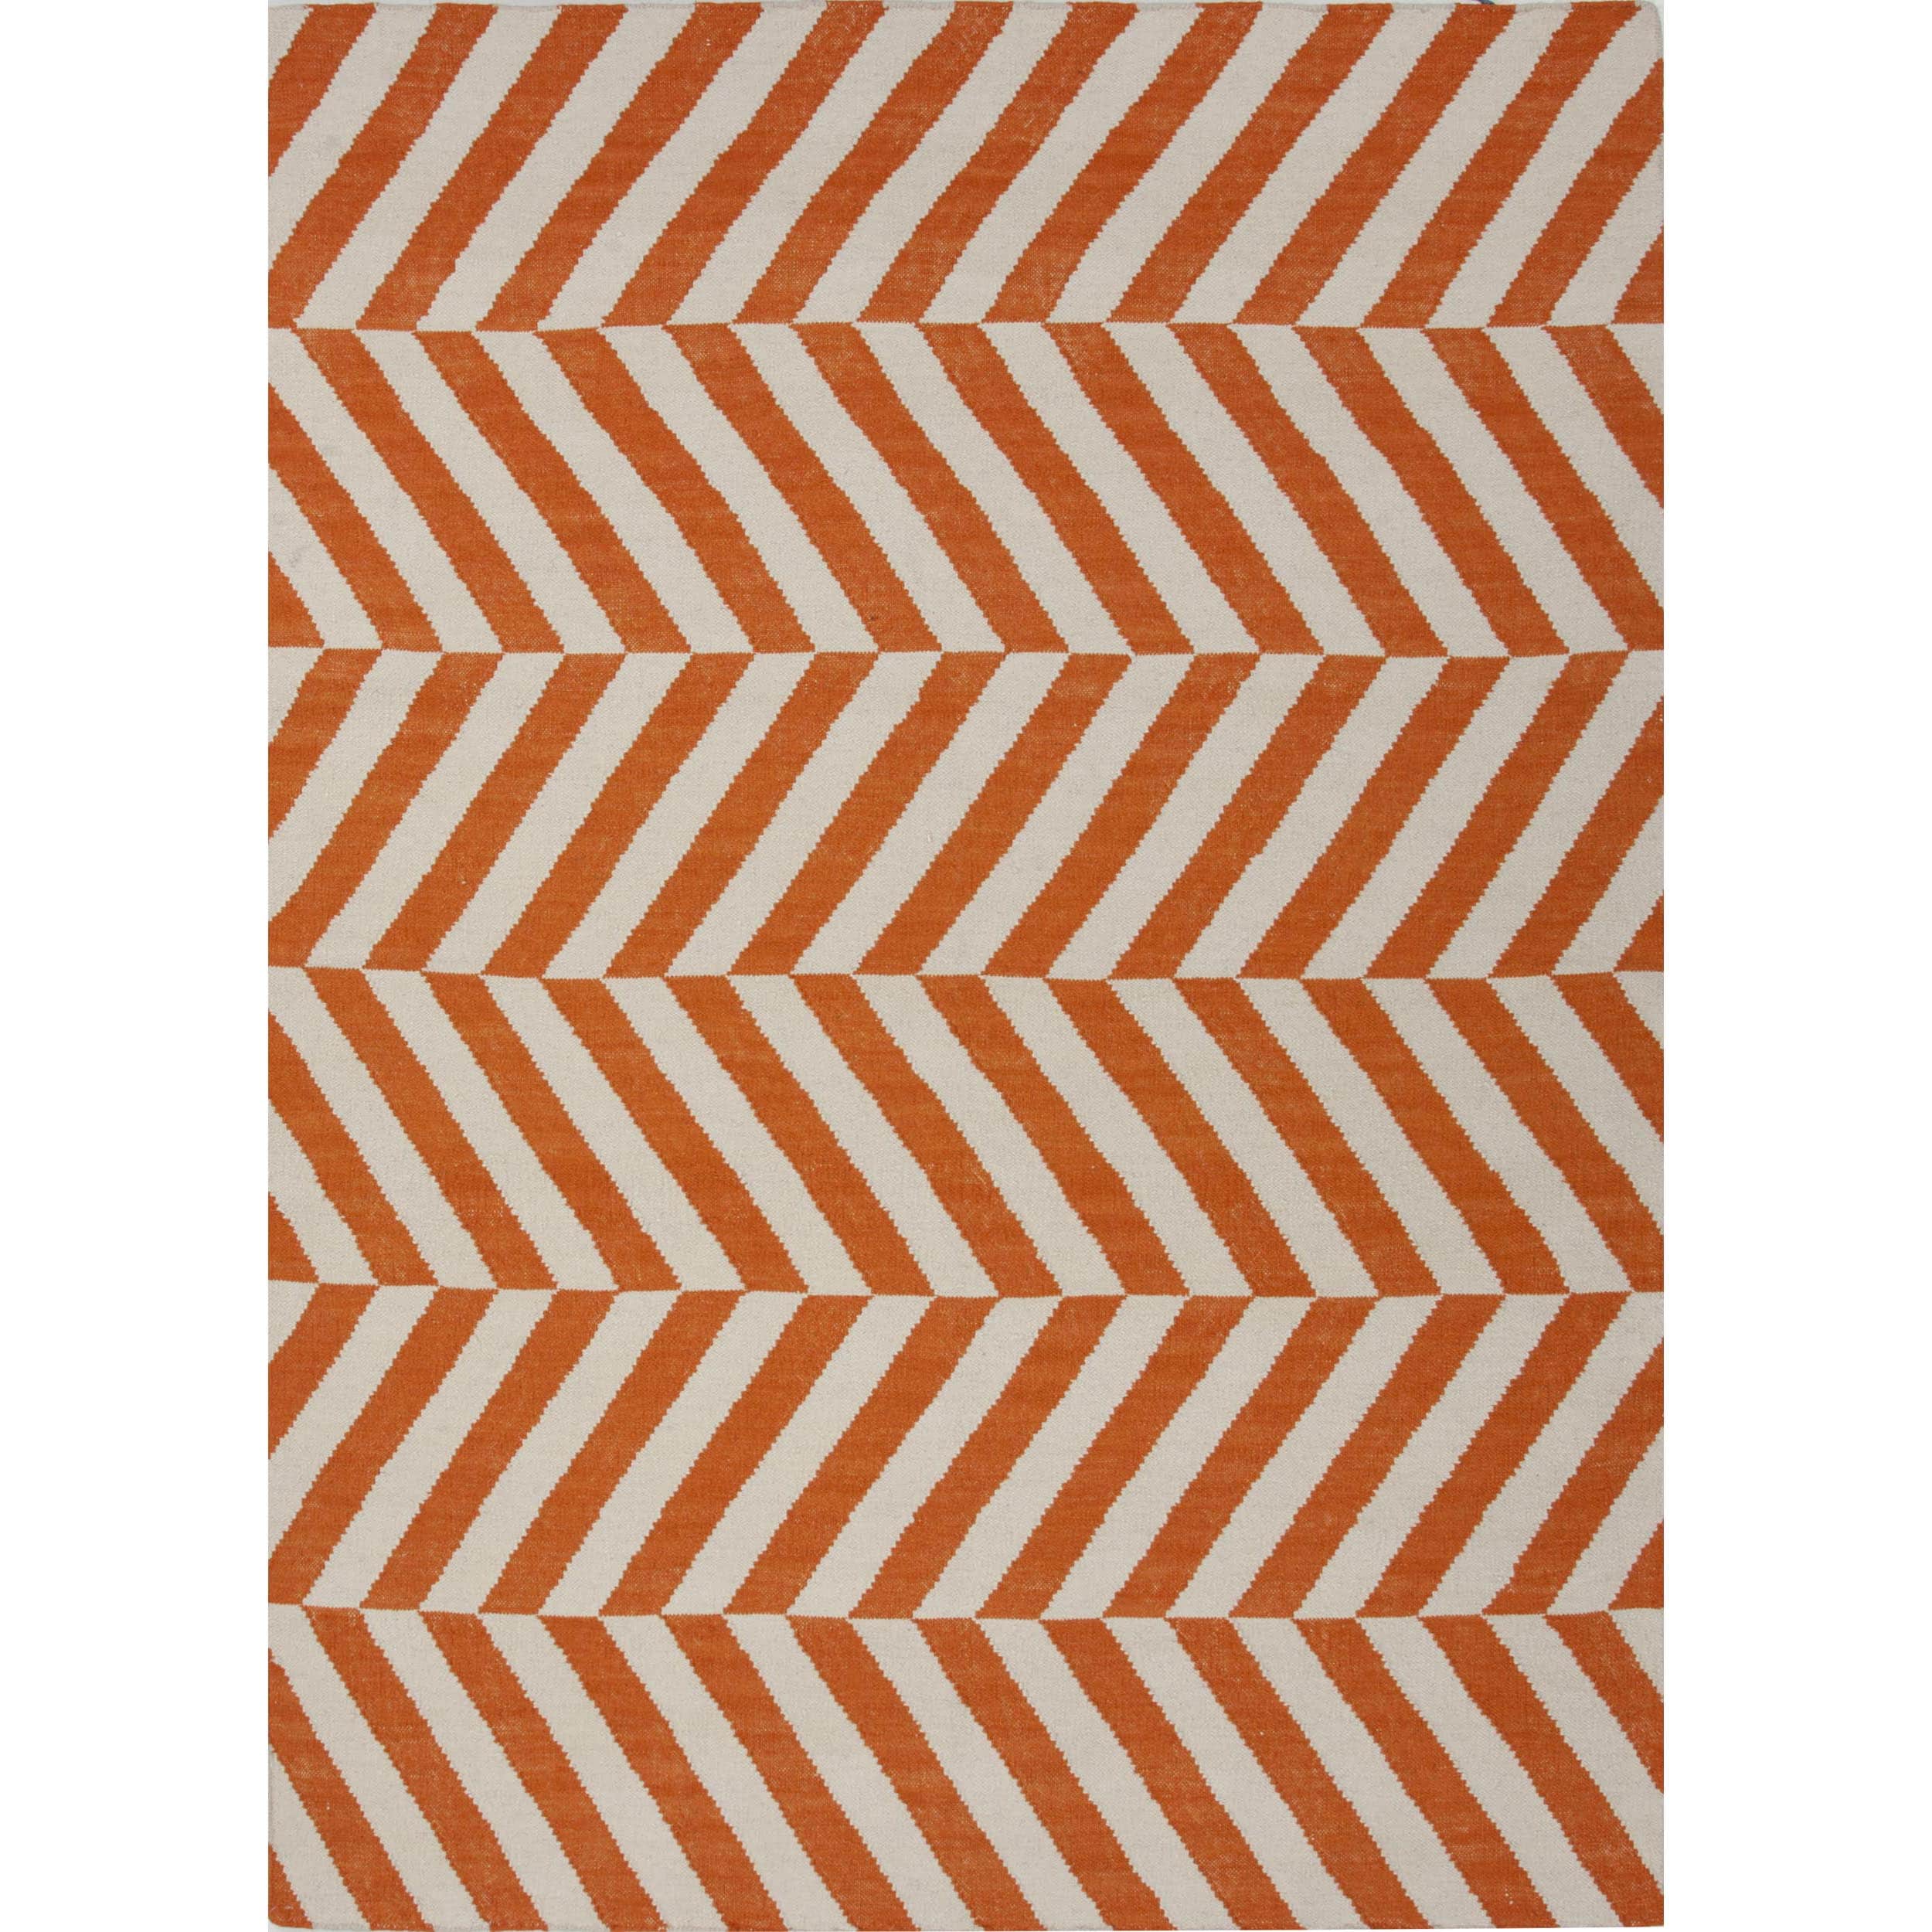 Handmade Flat Weave Stripe Red/ Orange Wool Rug (2 X 3)